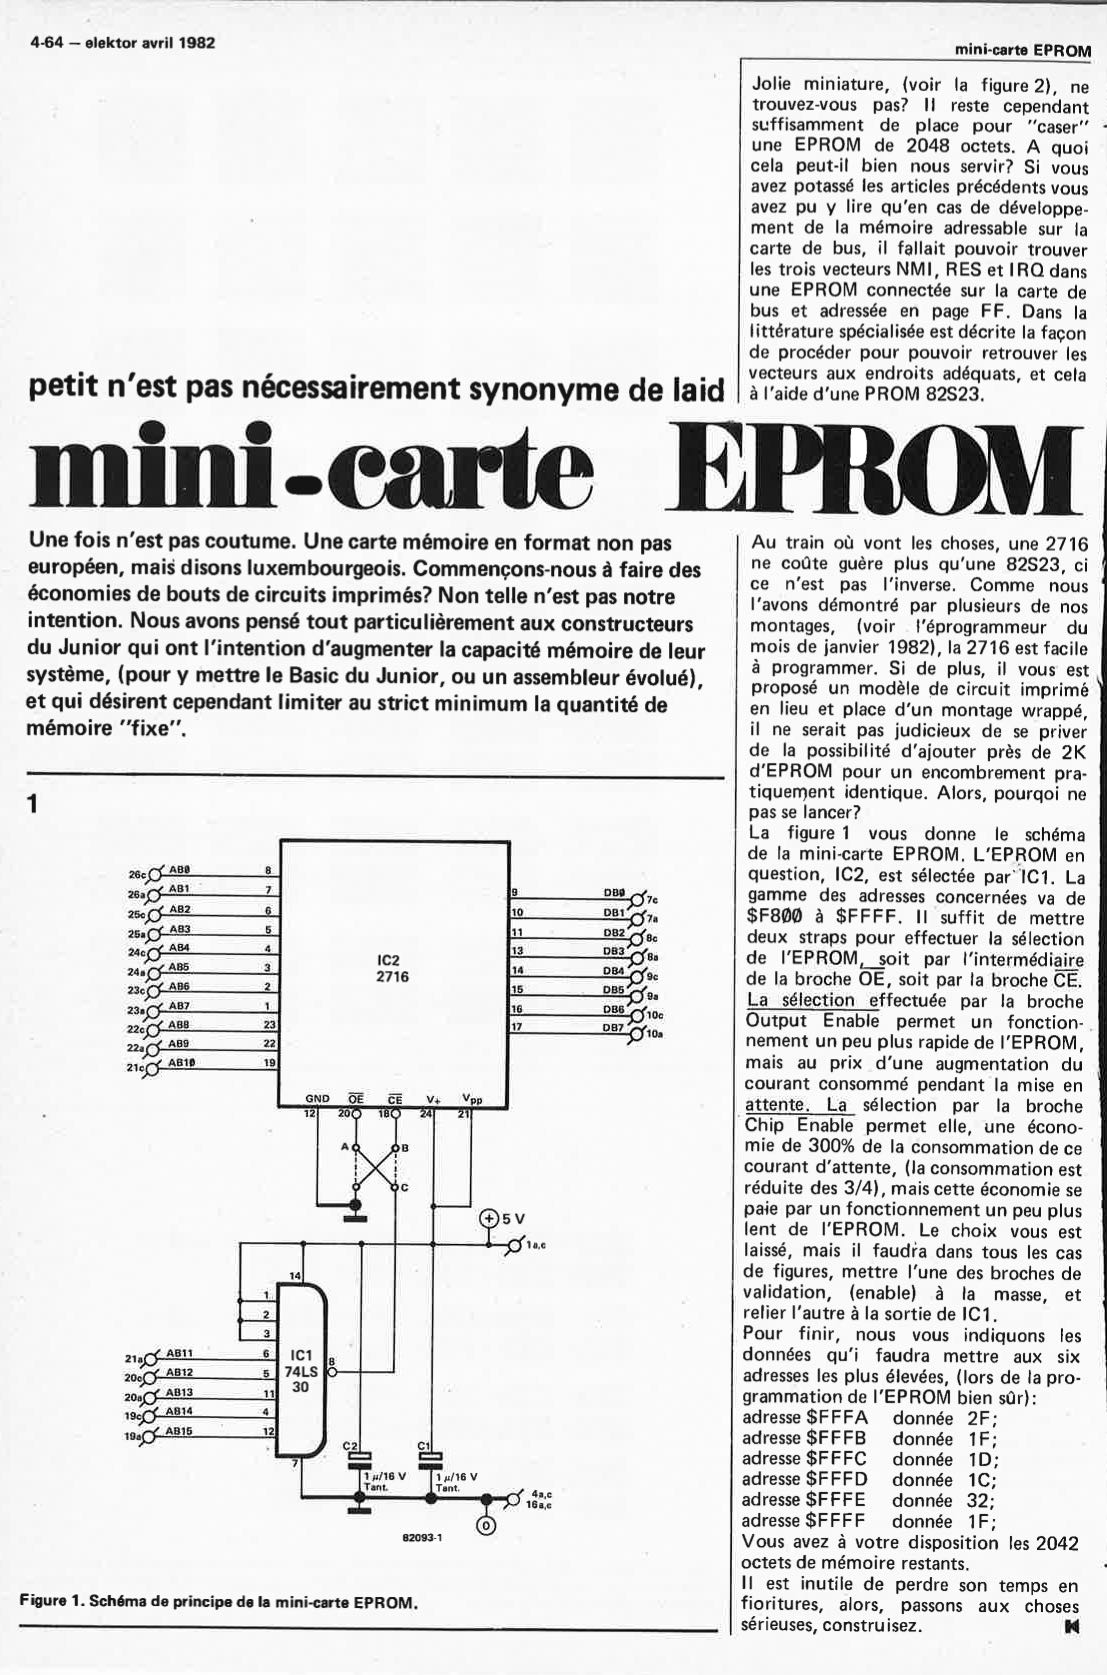 mini-carte EPROM